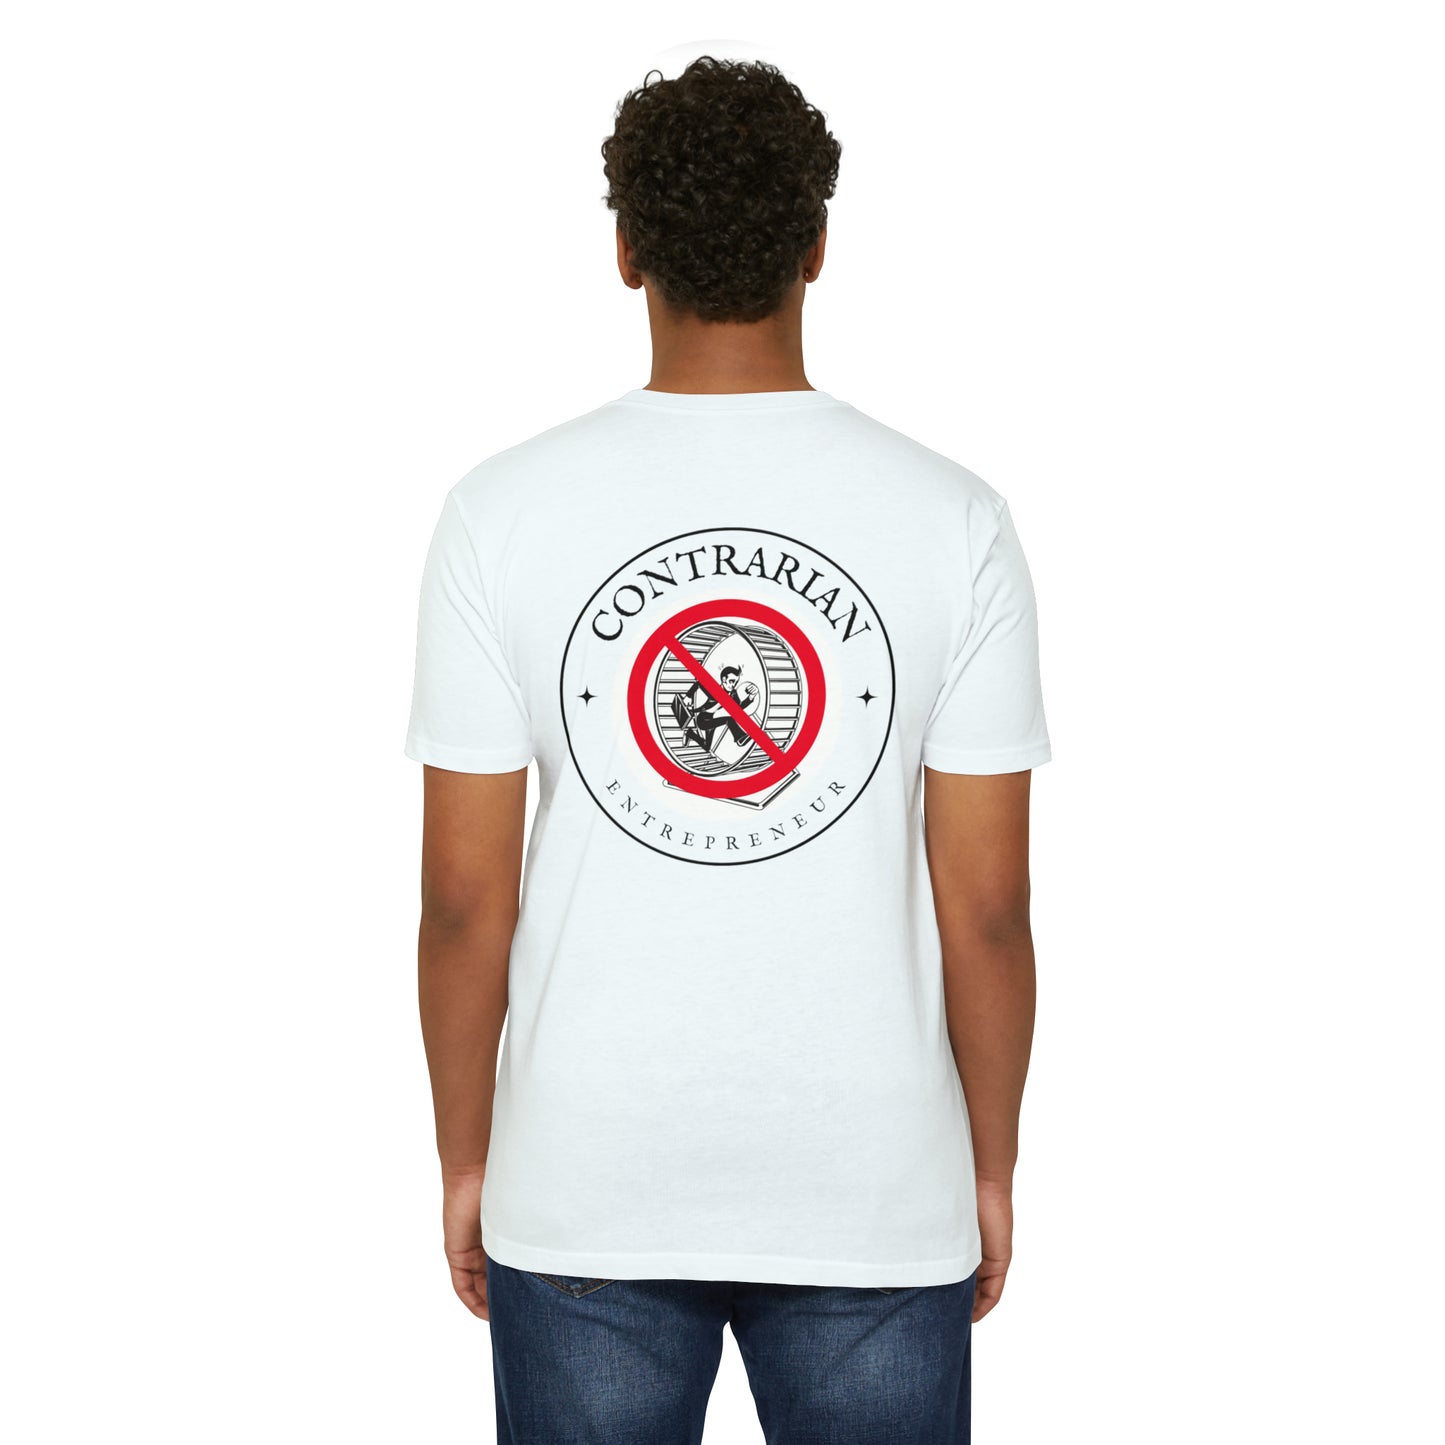 Sharpened Axe "Modern Day Slave" Jersey T-shirt